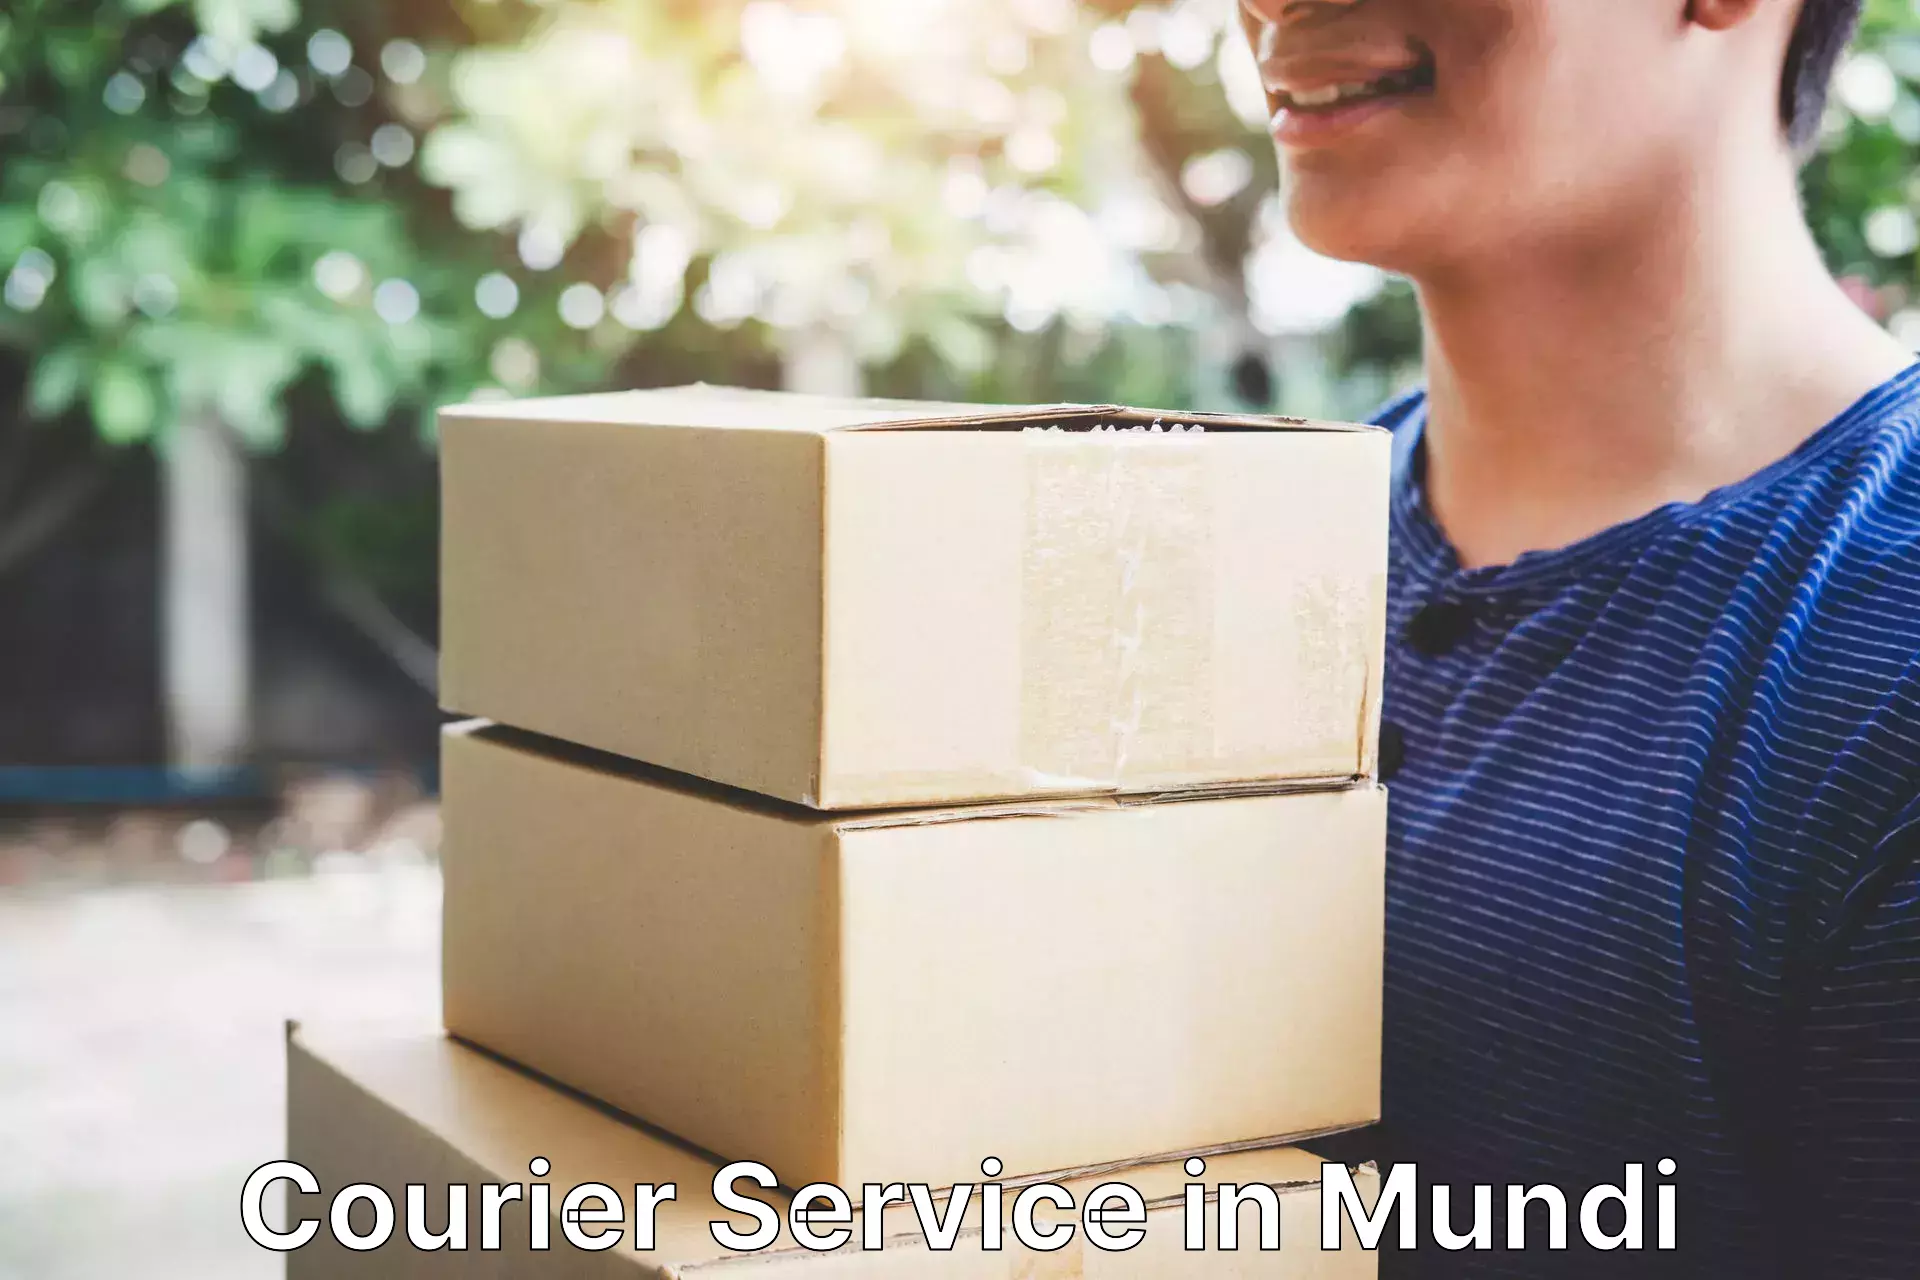 Lightweight parcel options in Mundi